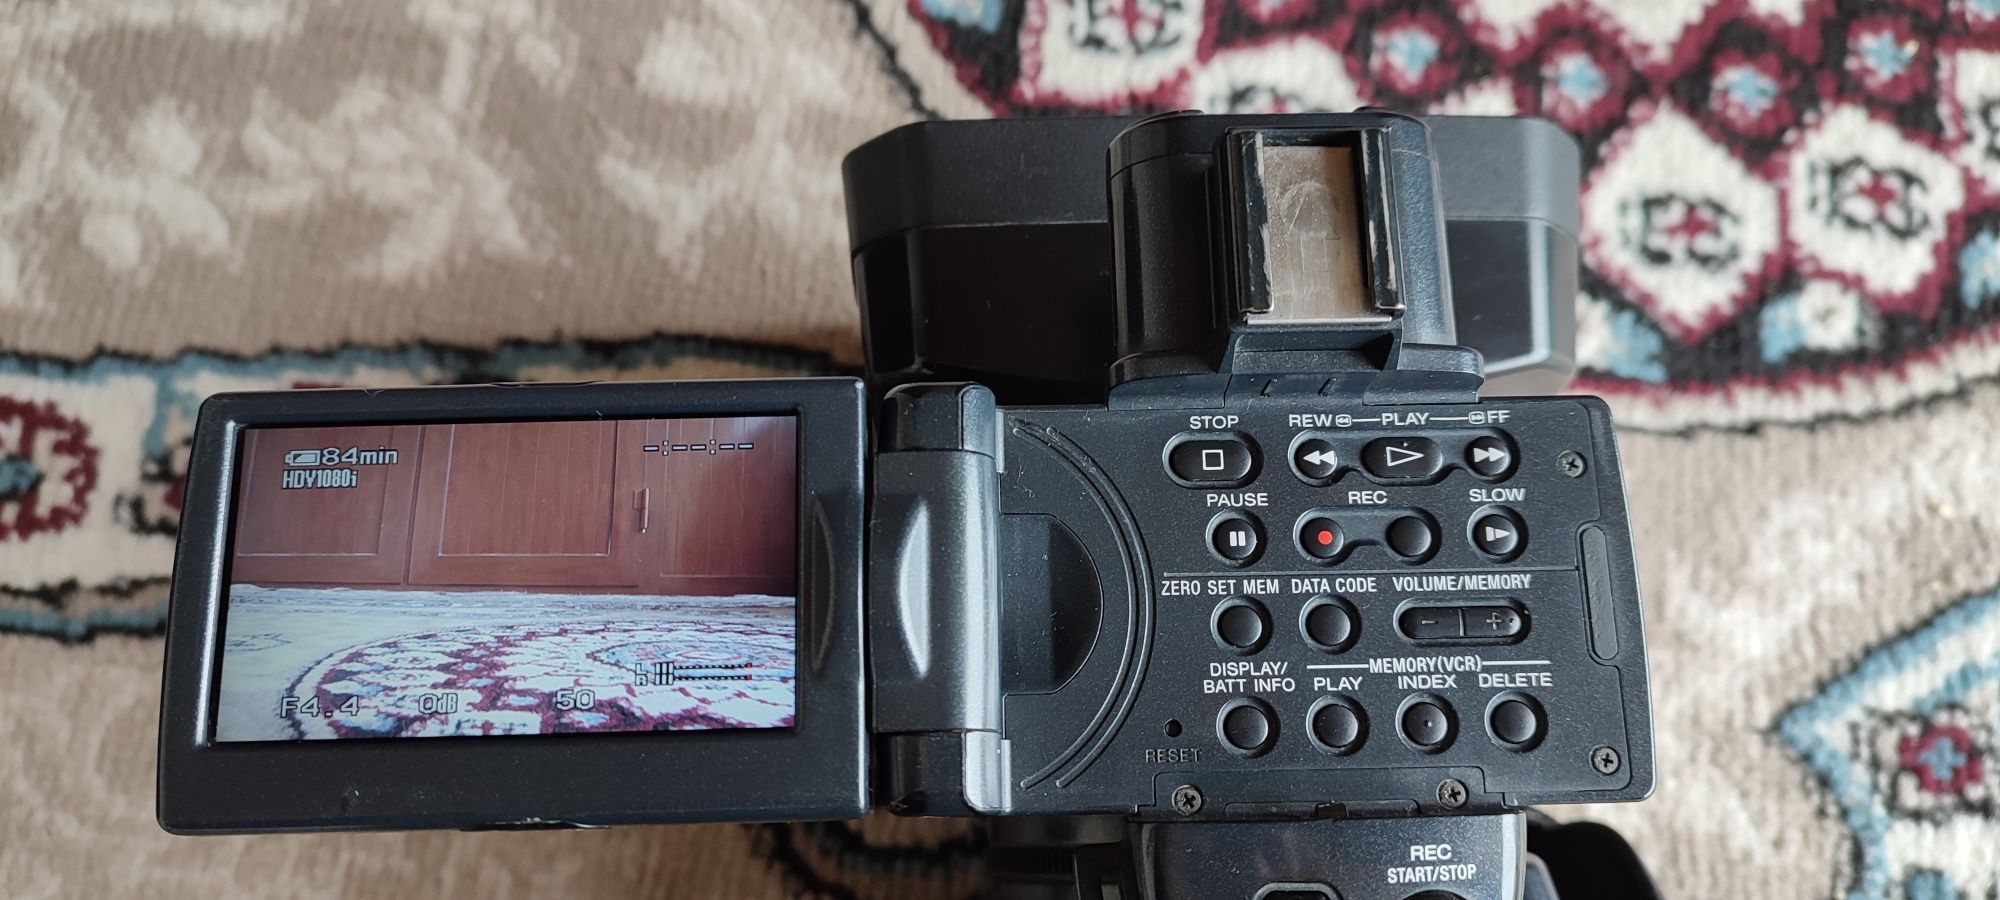 Videokamera HDV FX1000